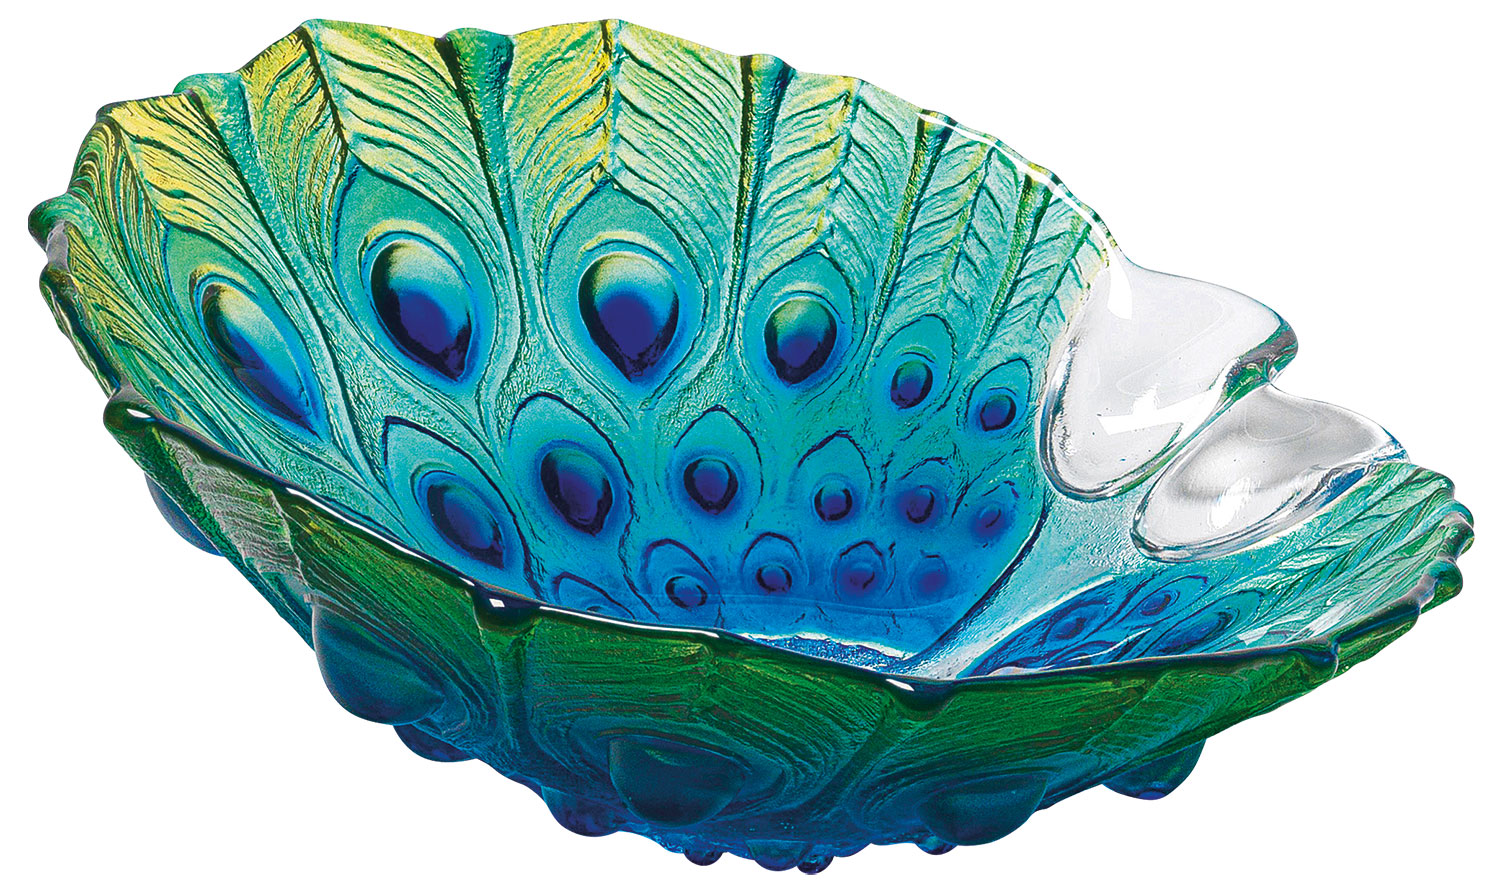 Glass bowl "Peacock" (small, Ø approx. 20 cm) by Mats Jonasson